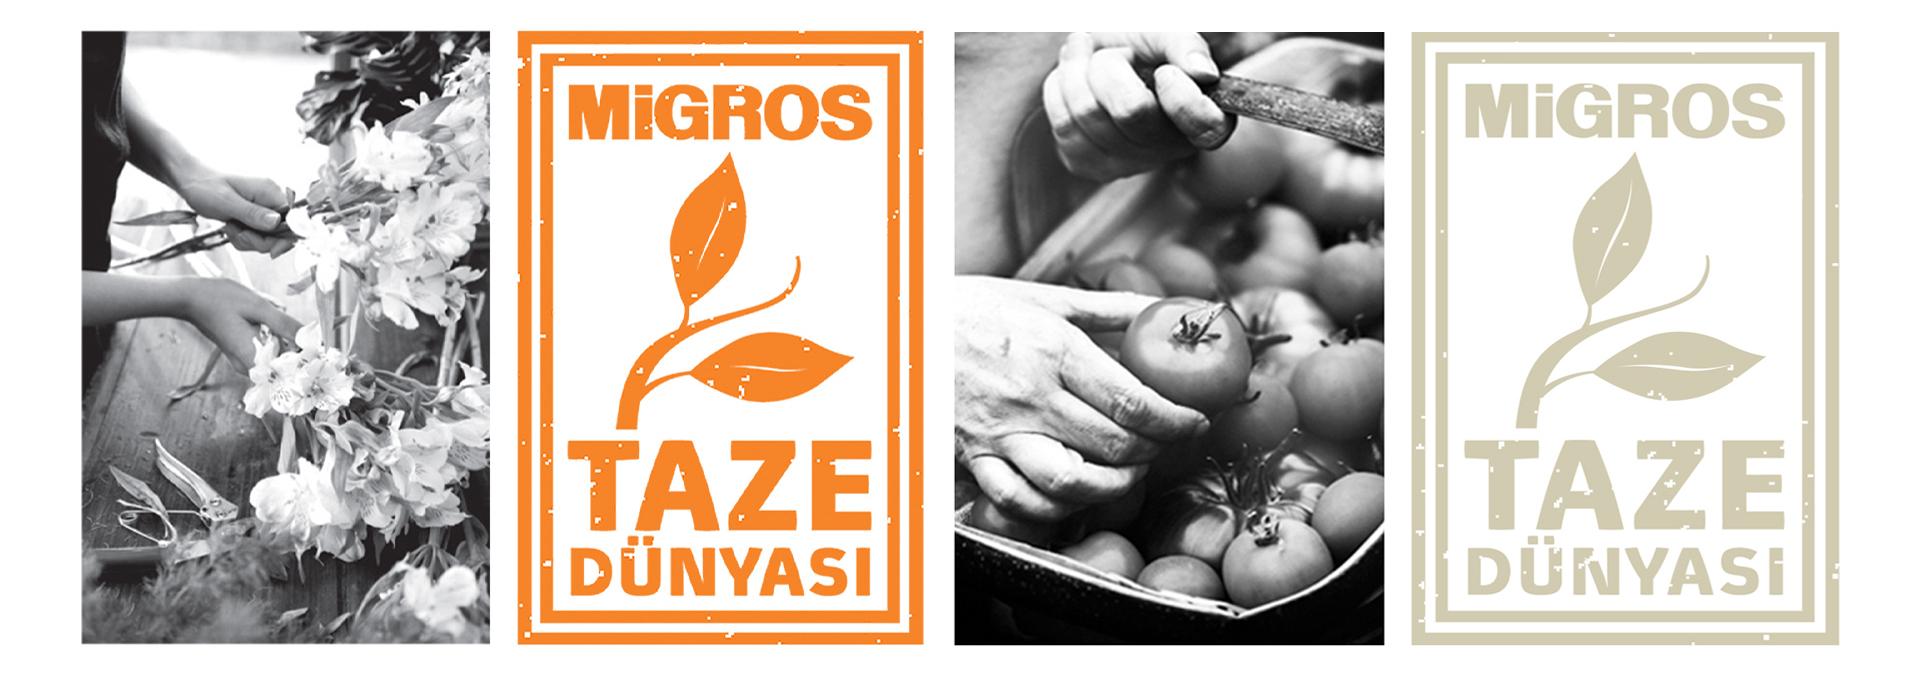 Migros Turkey supermarket fresh produce brand communications